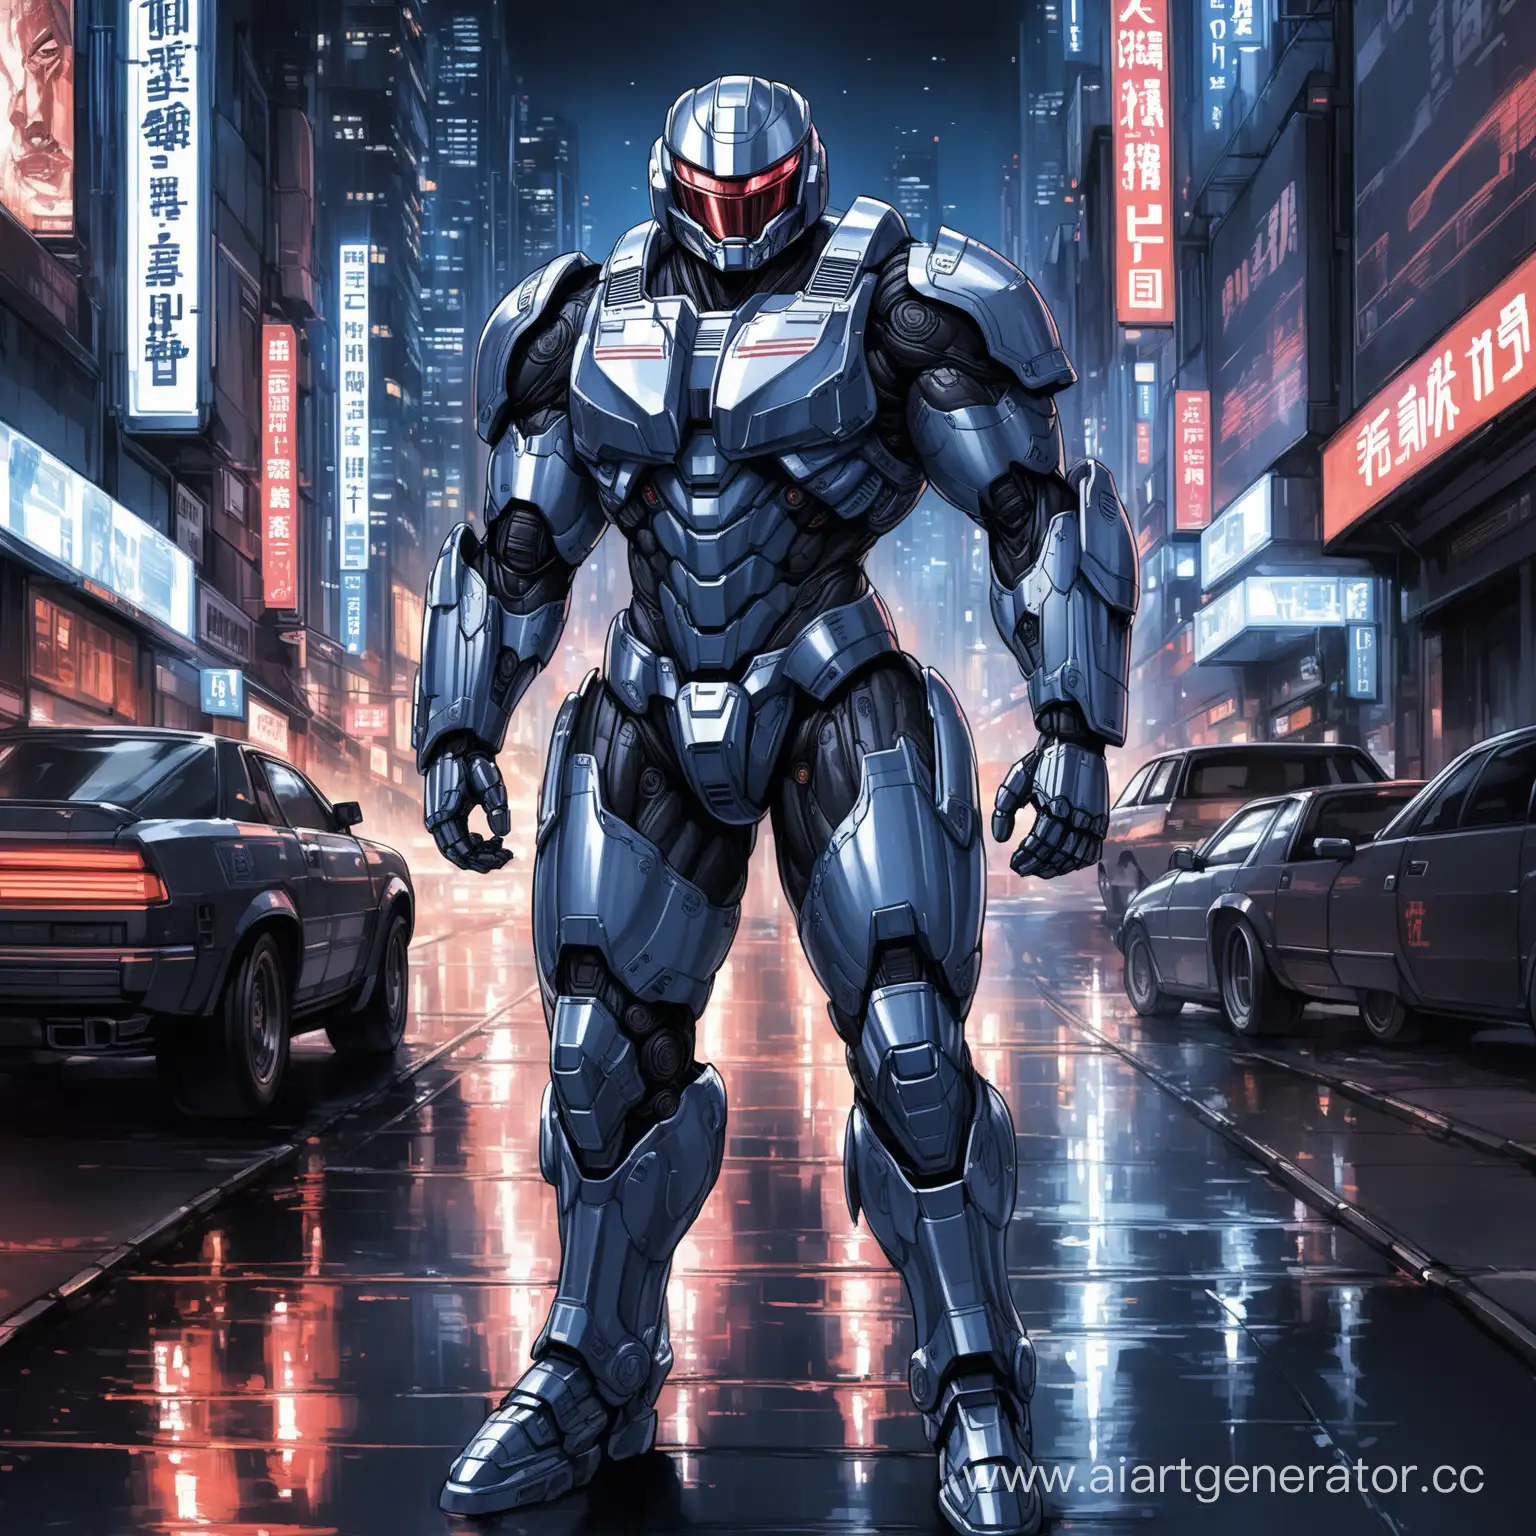 Powerhouse-RobocopInspired-Armor-with-Advanced-Technologies